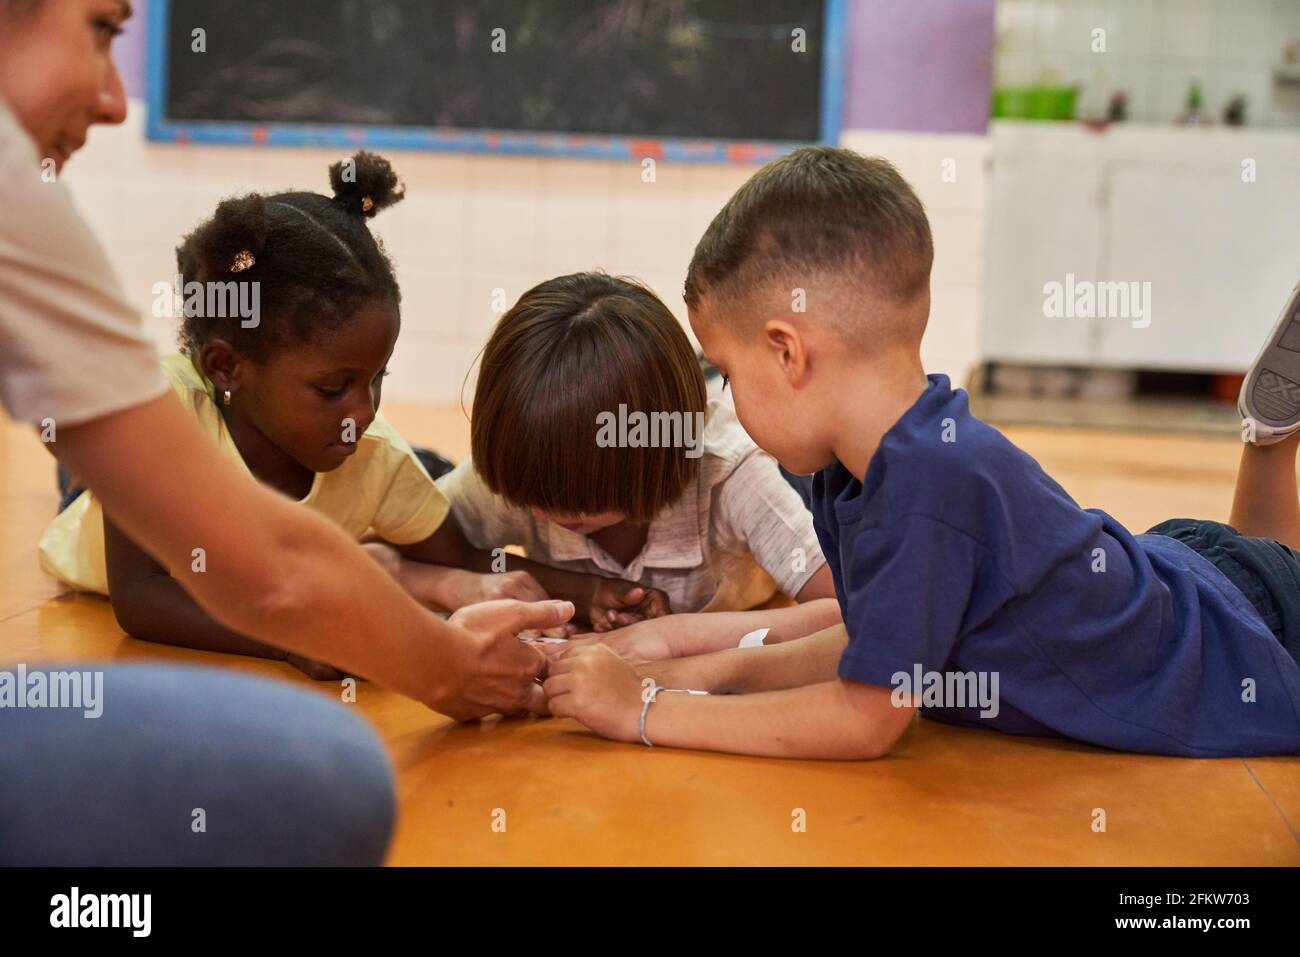 Children play together on the floor in kindergarten or after-school care center with a kindergarten teacher Stock Photo